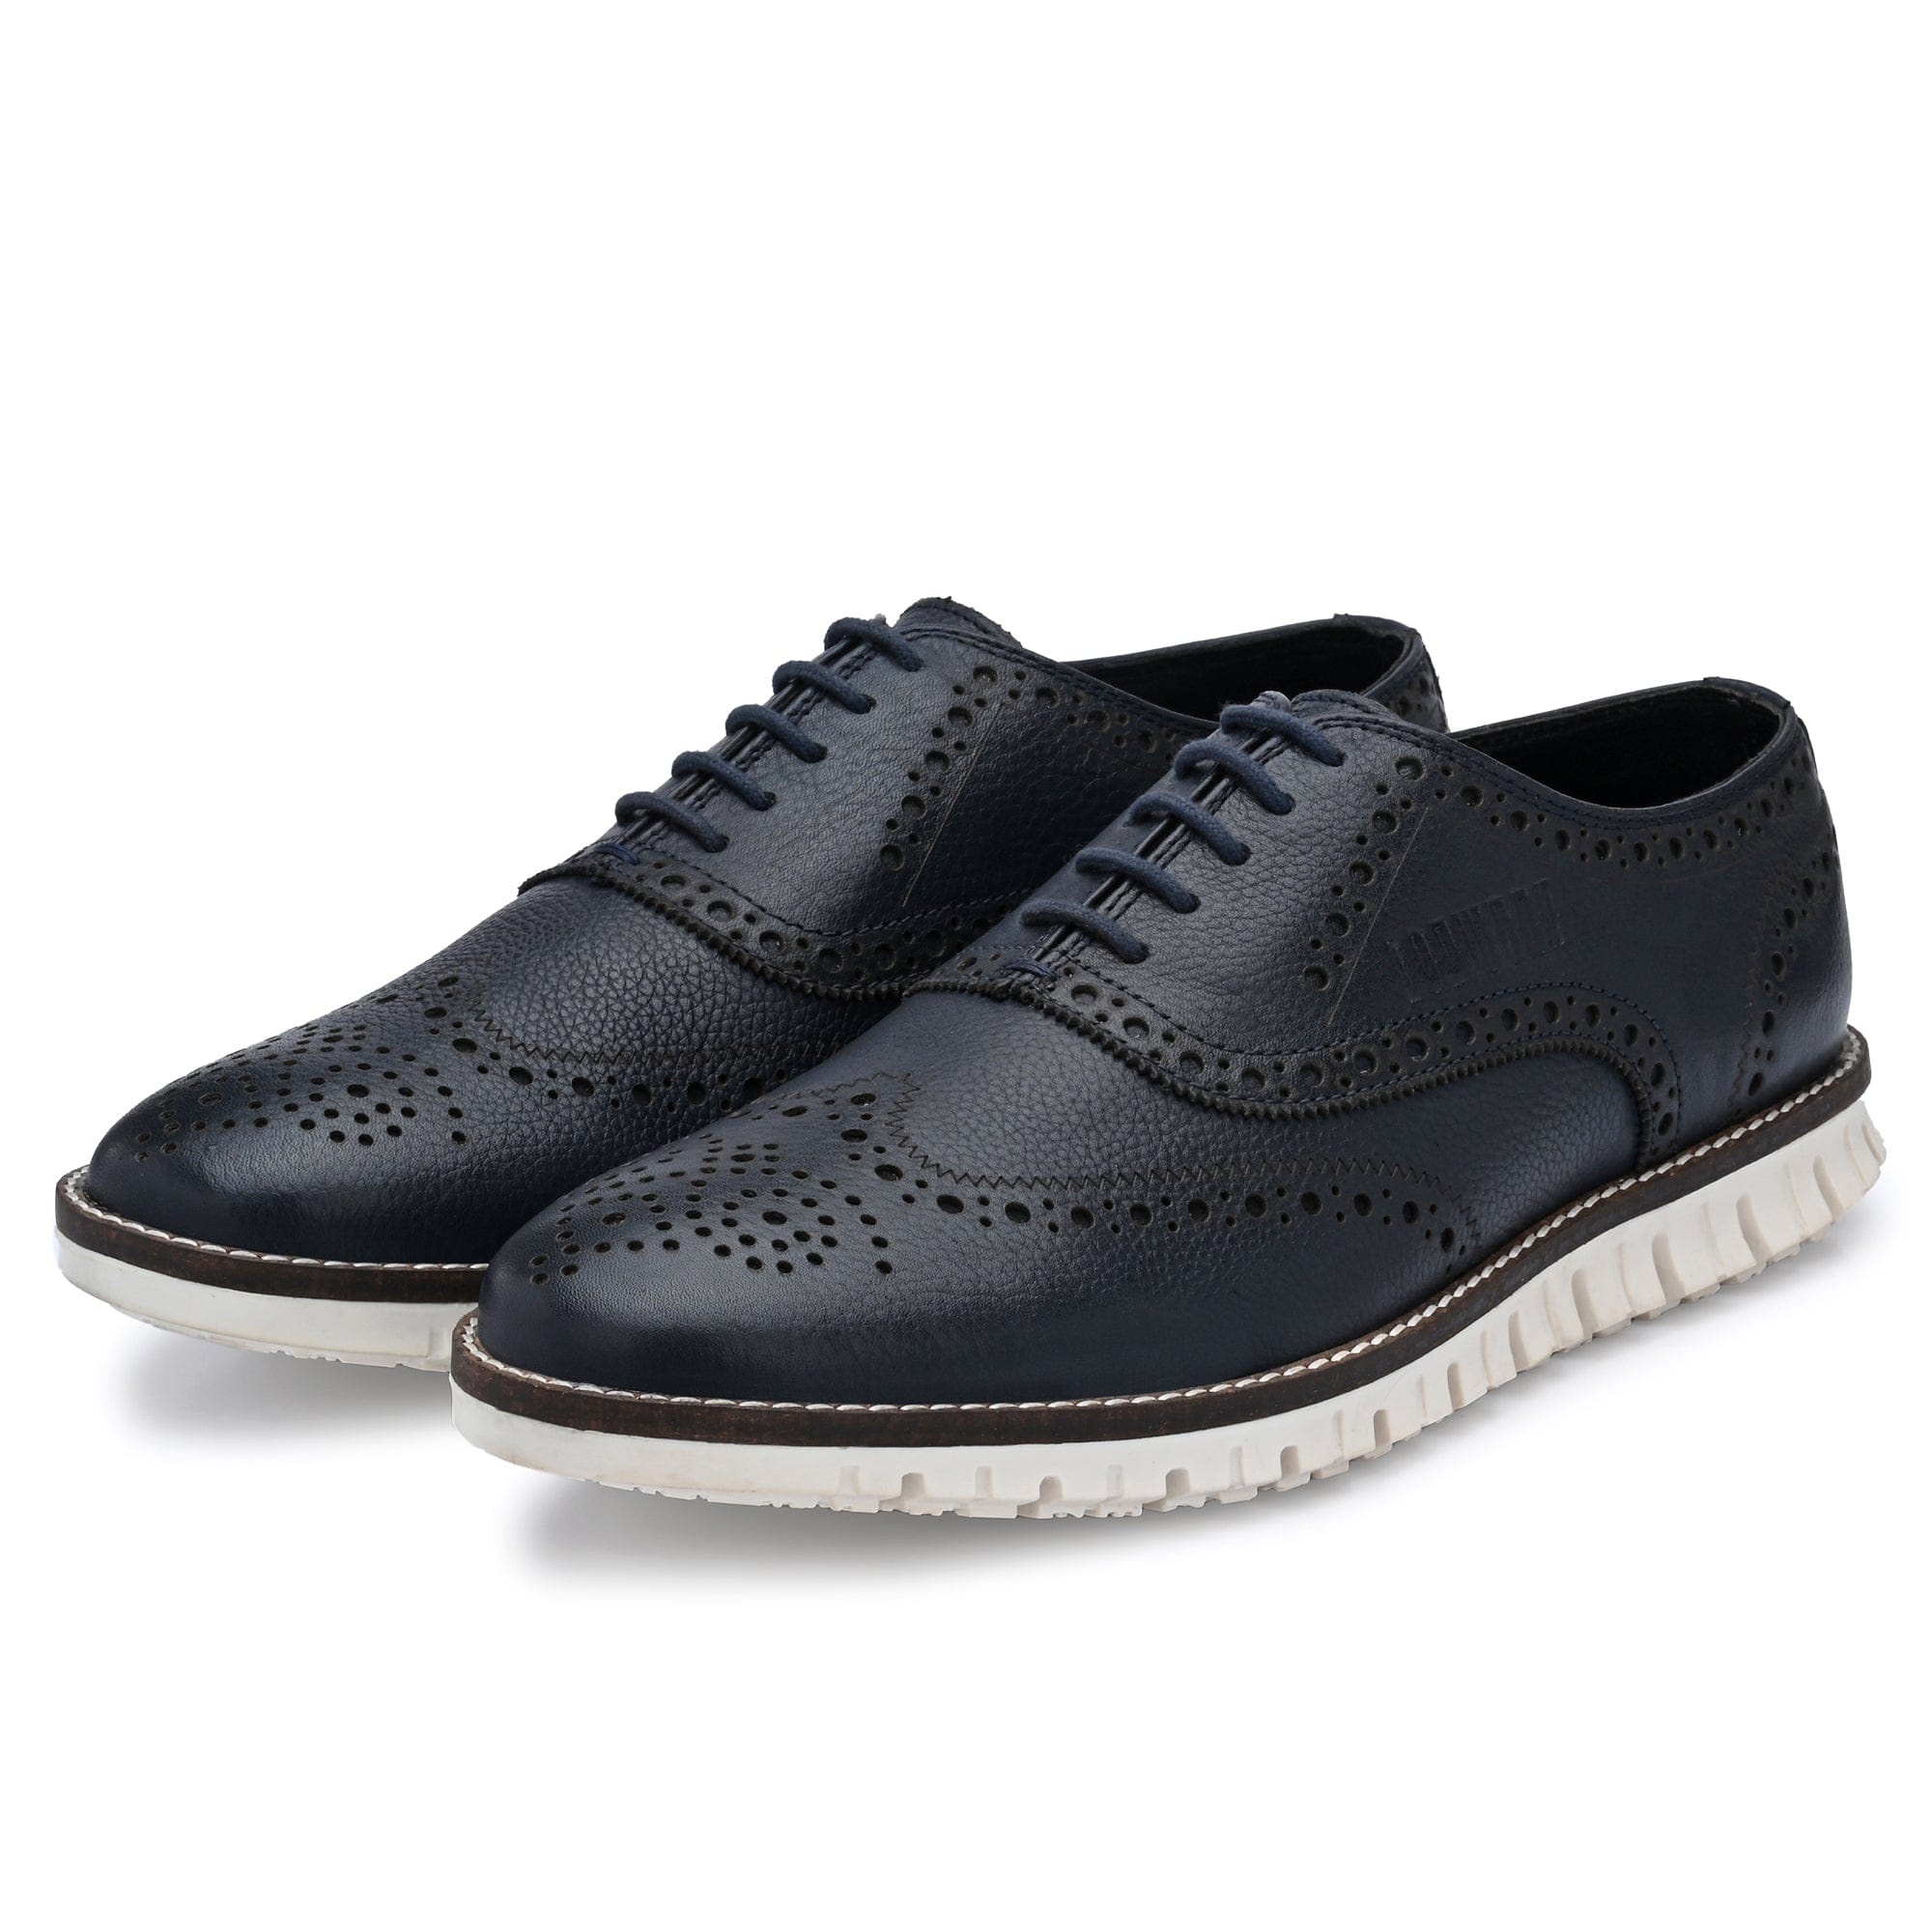 Legwork Informal Wingtip Oxford Brogue Navy Blue Full Grain Leather Shoe